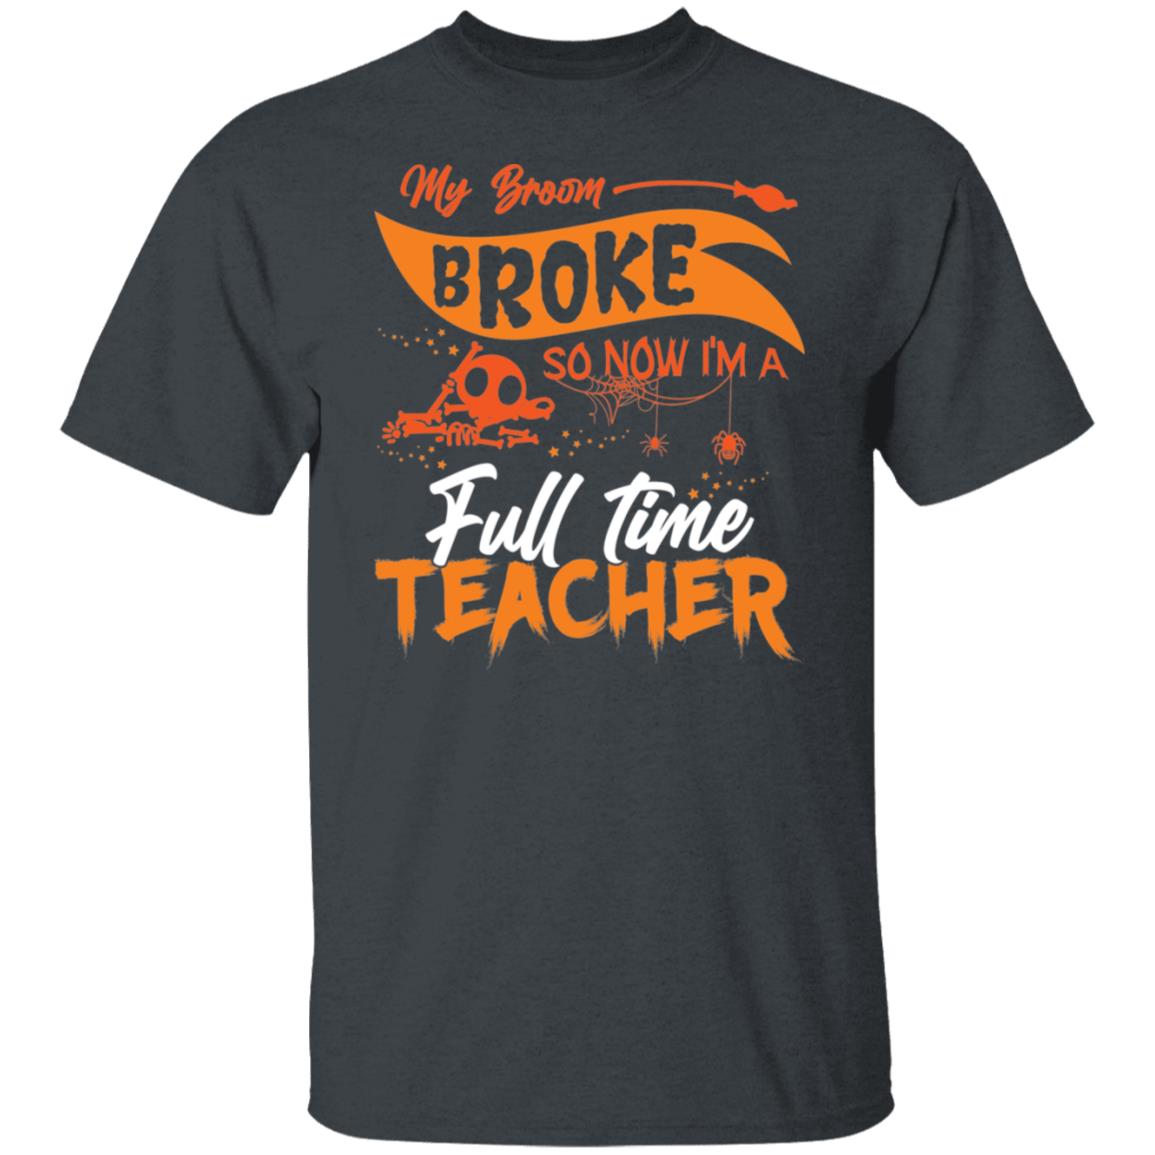 My Broom Broke So Now I'm a Full Time Teacher Shirt